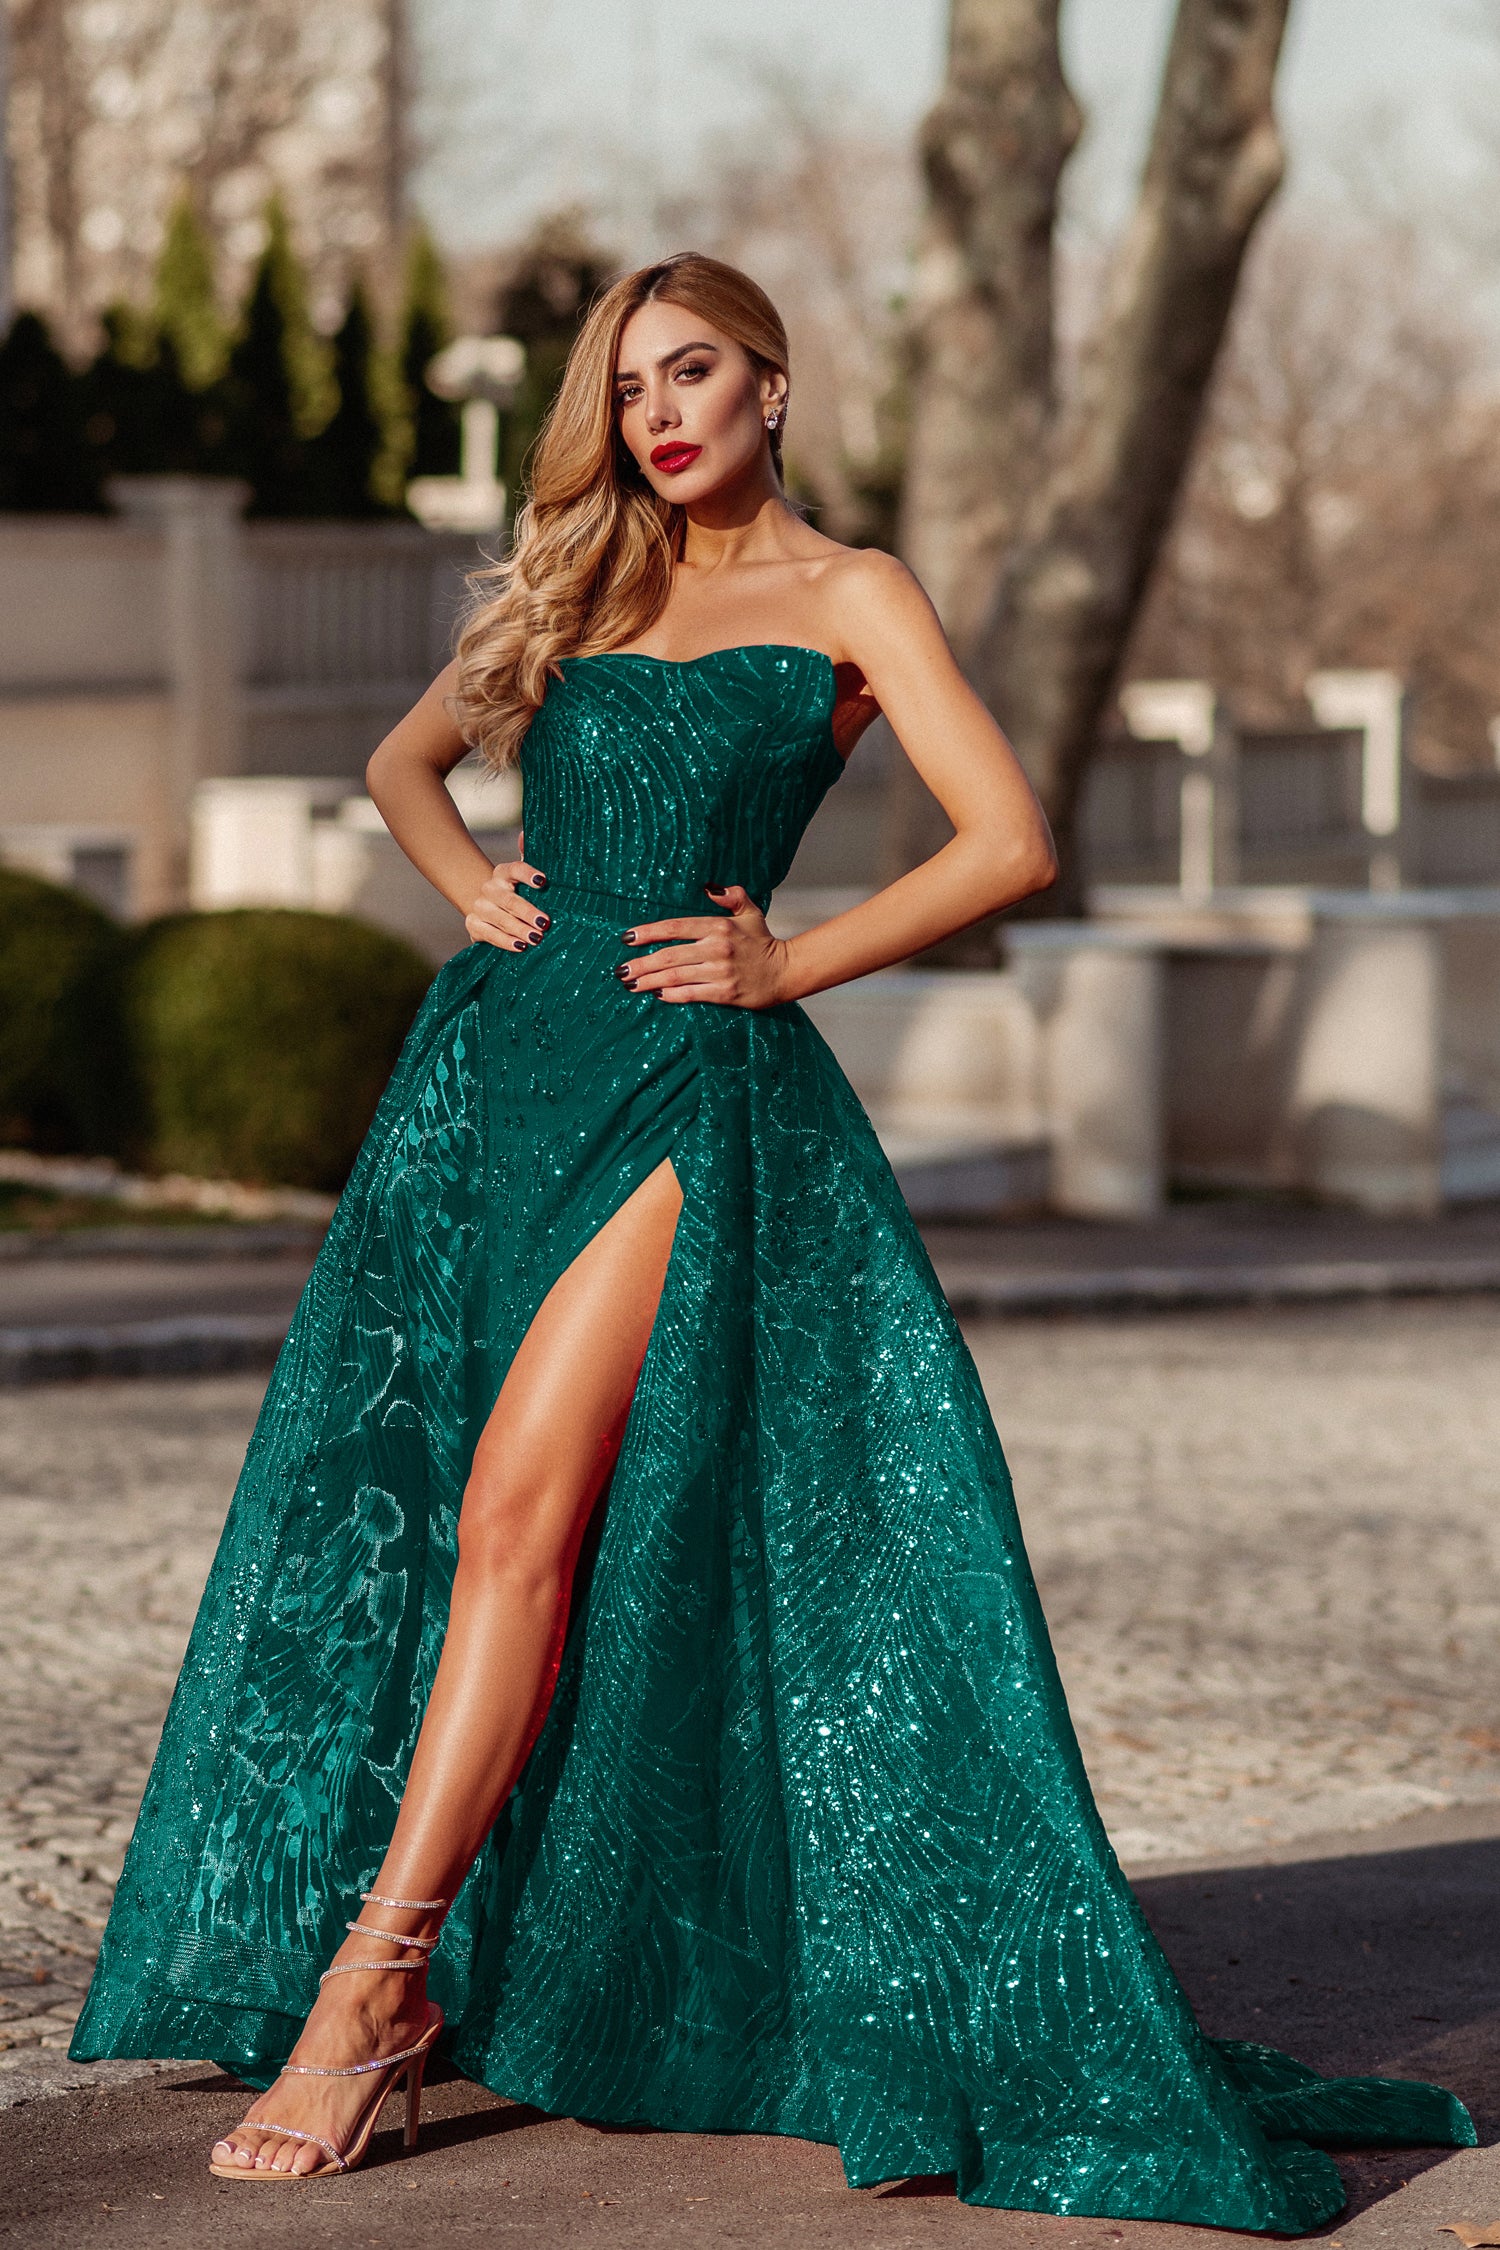 Tina Holly Couture Designer TK310 Emerald Green Glitter Formal Dress w